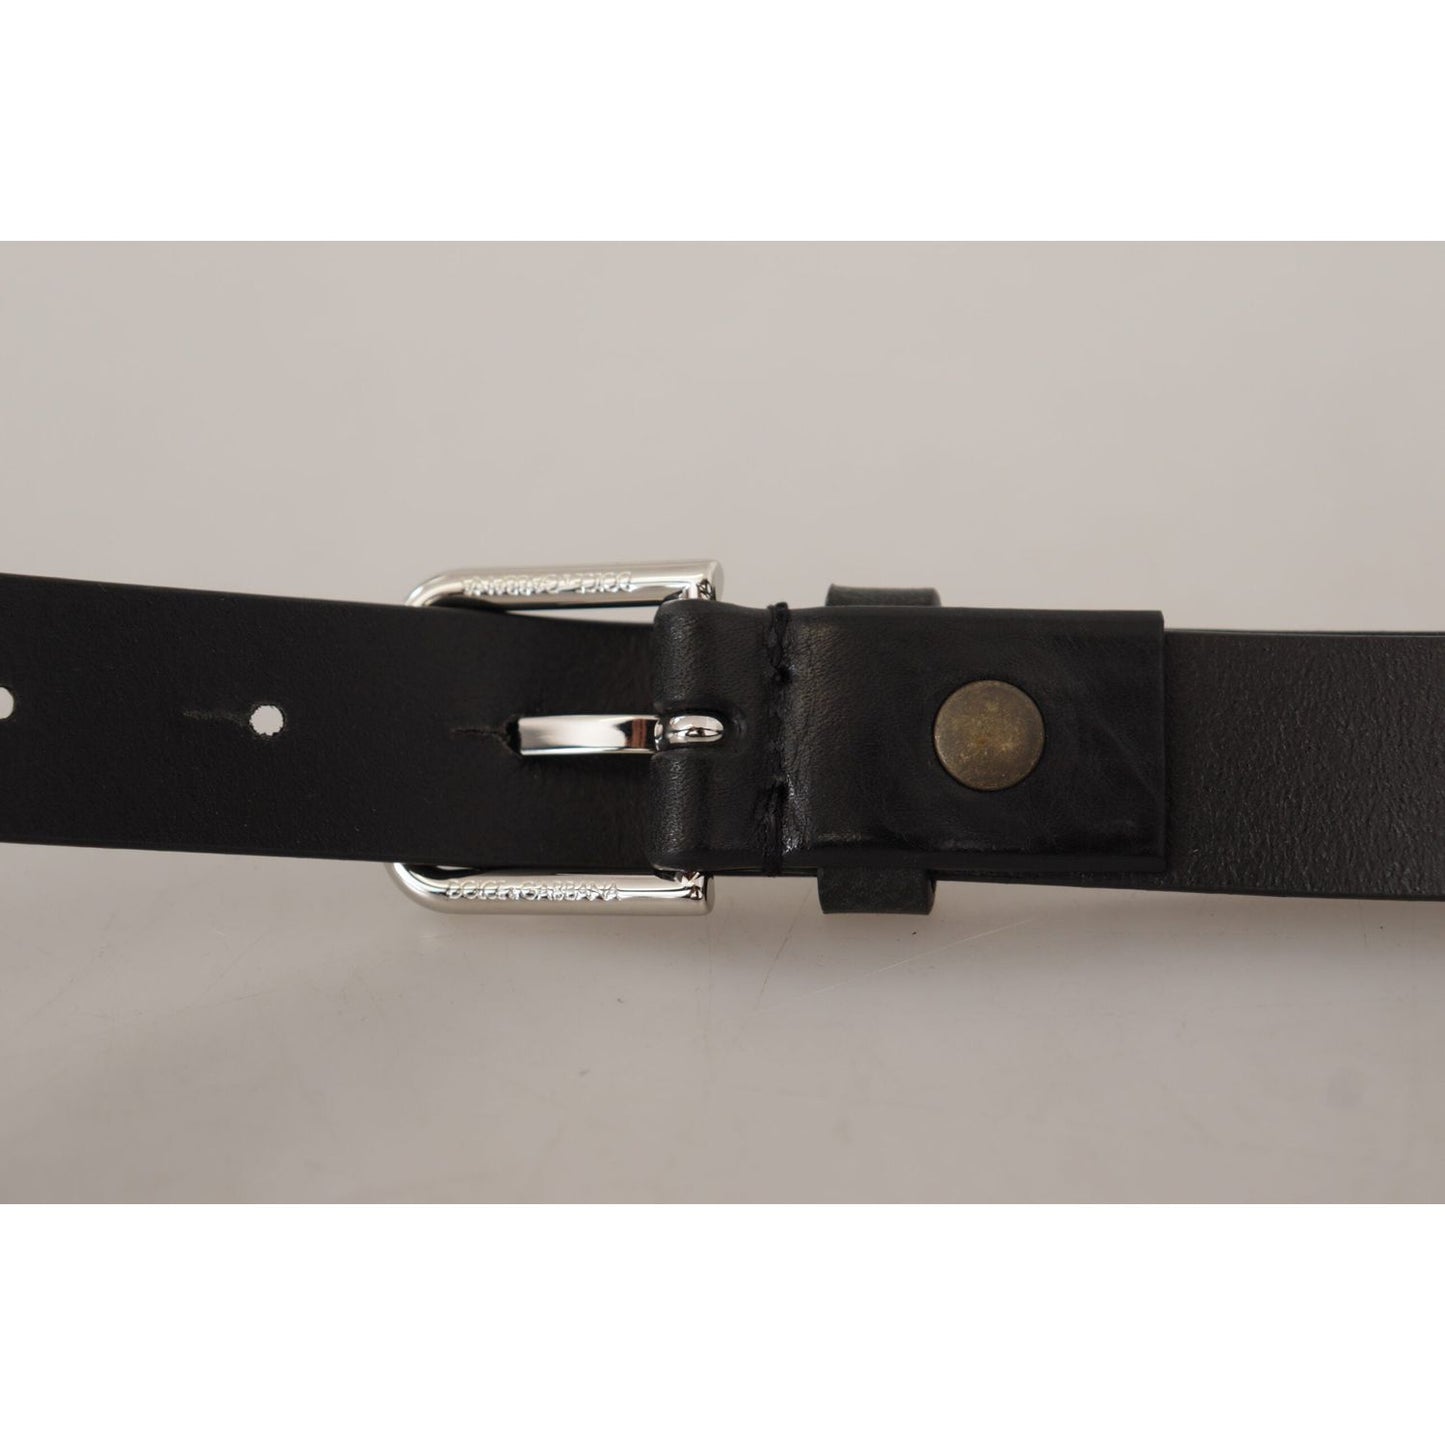 Dolce & Gabbana Elegant Black Leather Belt with Metal Buckle black-calf-leather-silver-tone-logo-metal-buckle-belt